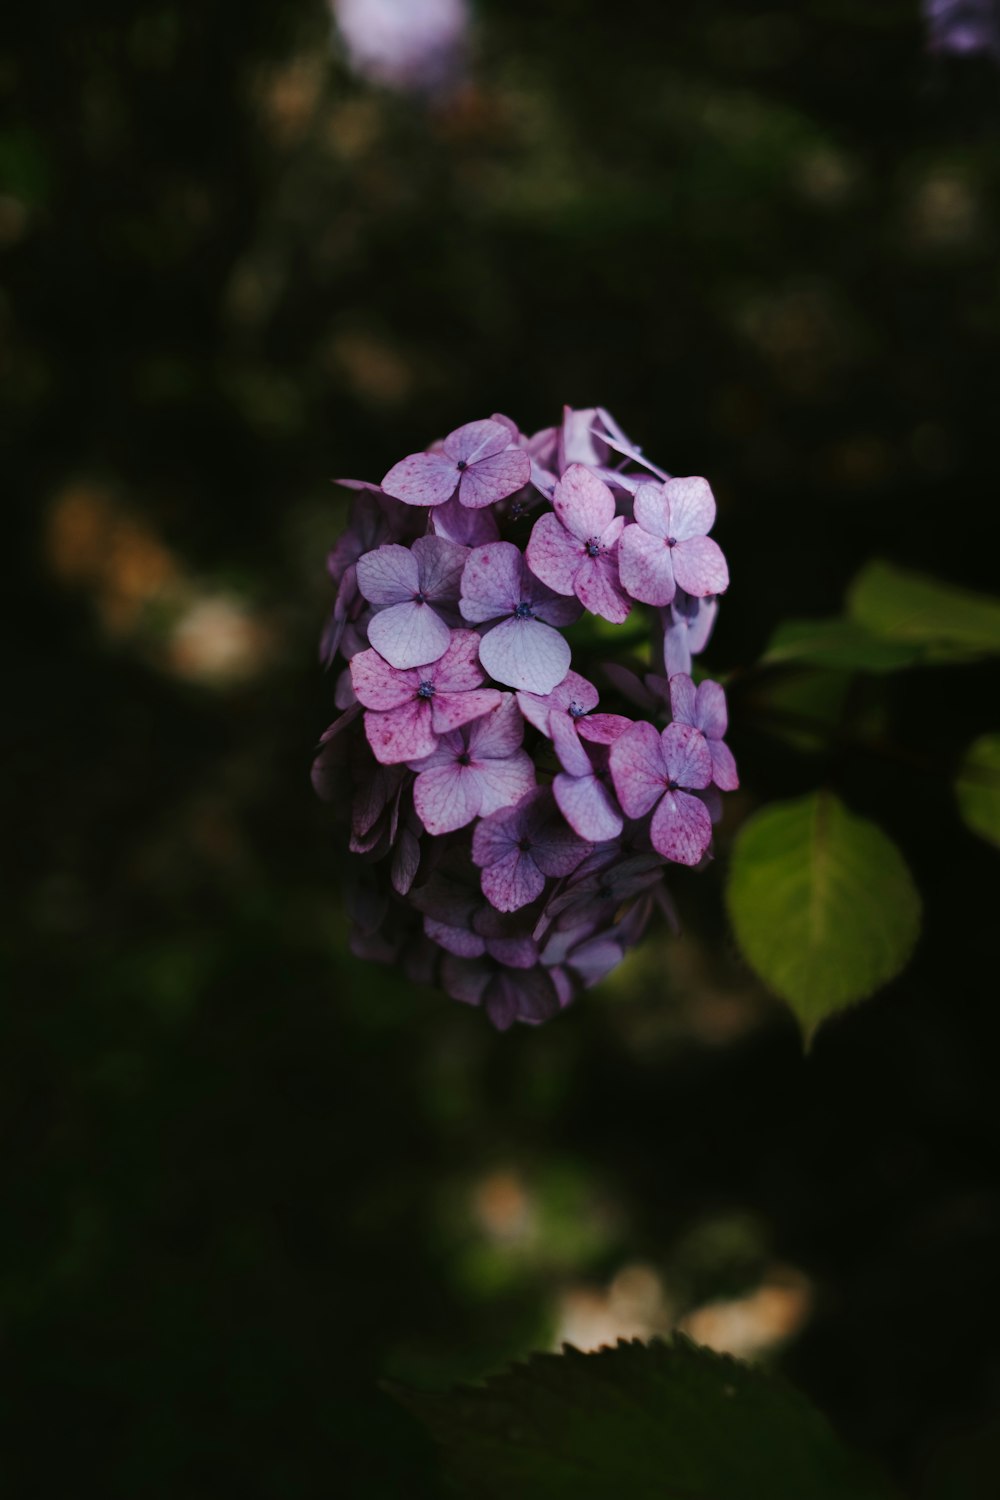 purple-petaled flower on selective focus photography